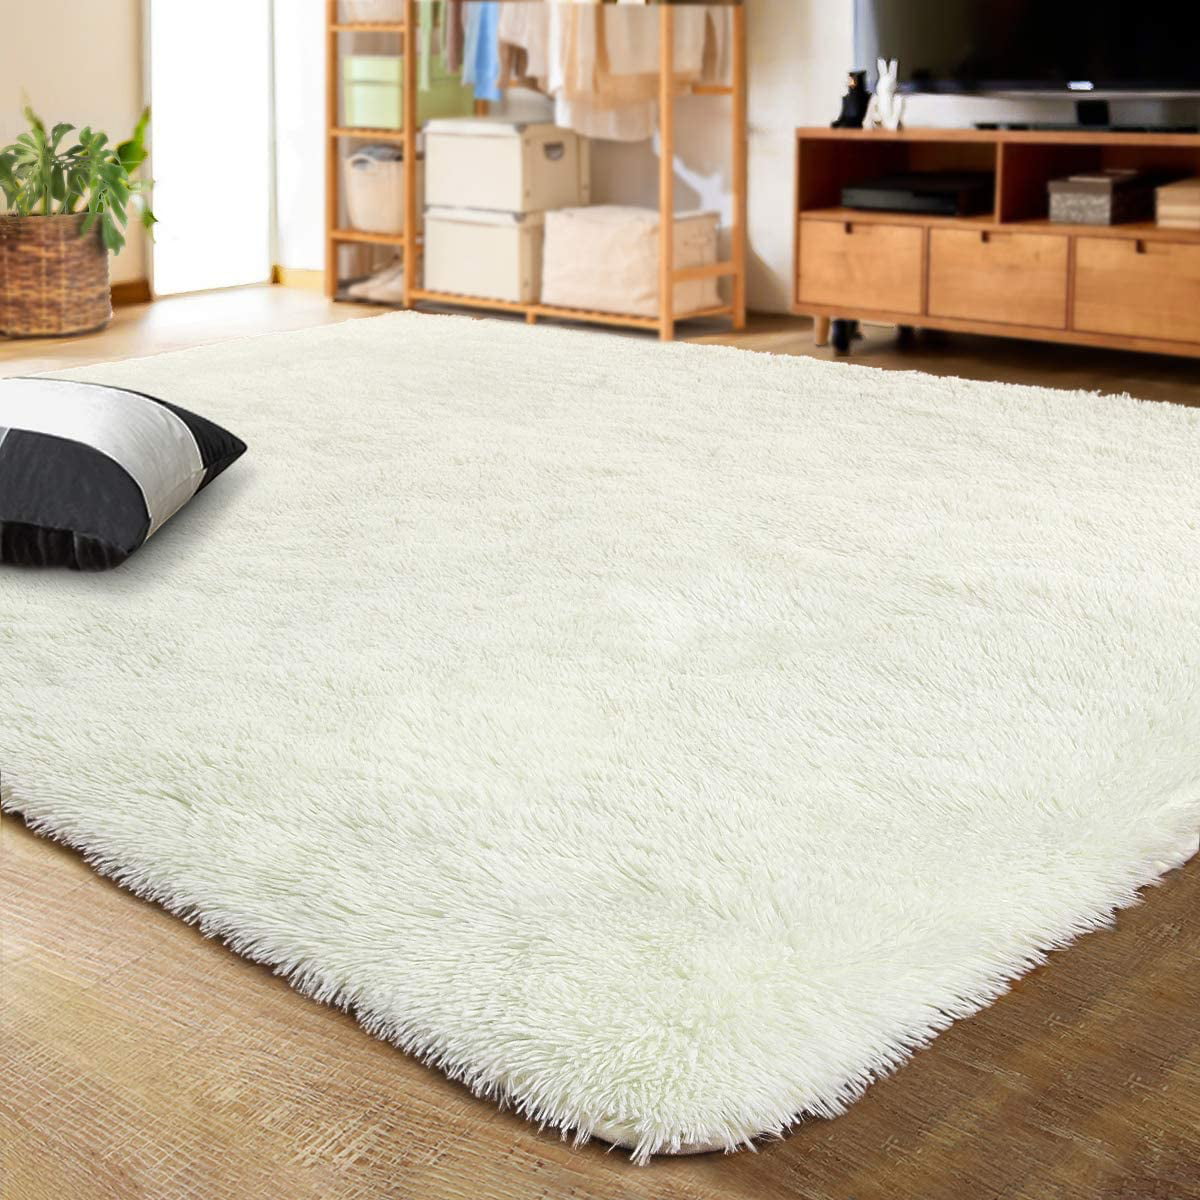  fluffy white area rug design decorating